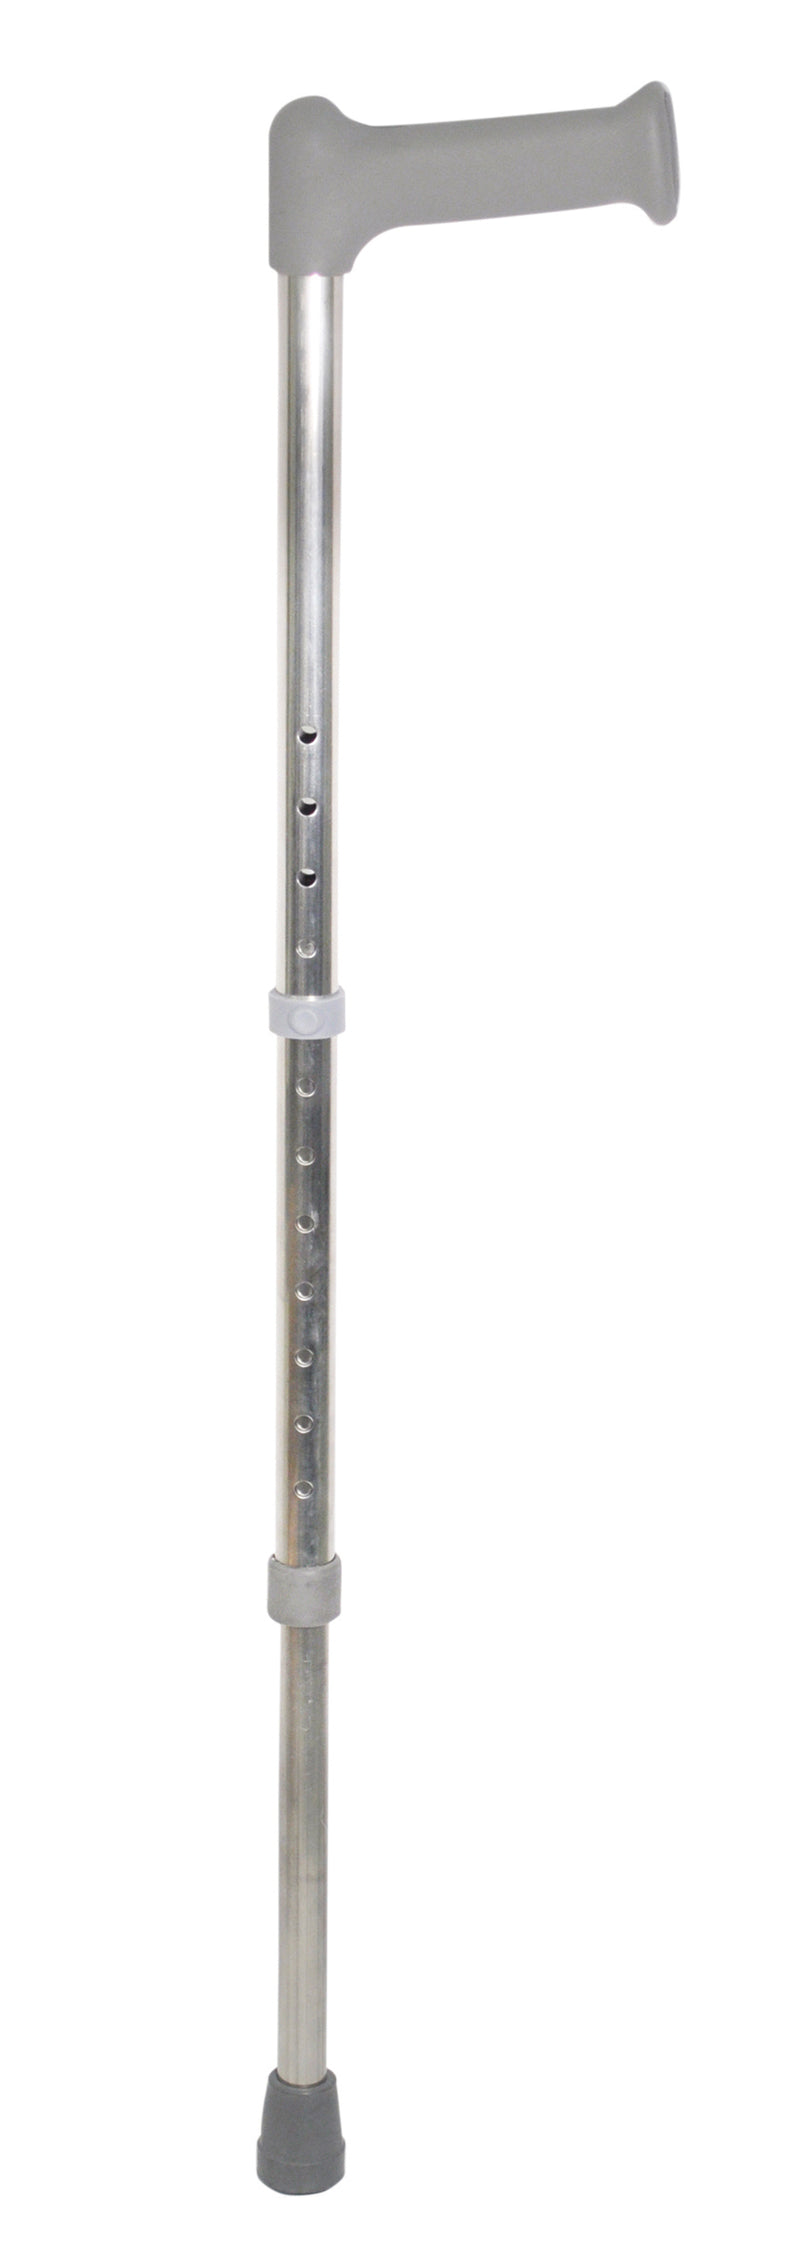 Aluminium Walking Stick Medium Adjustable Height.